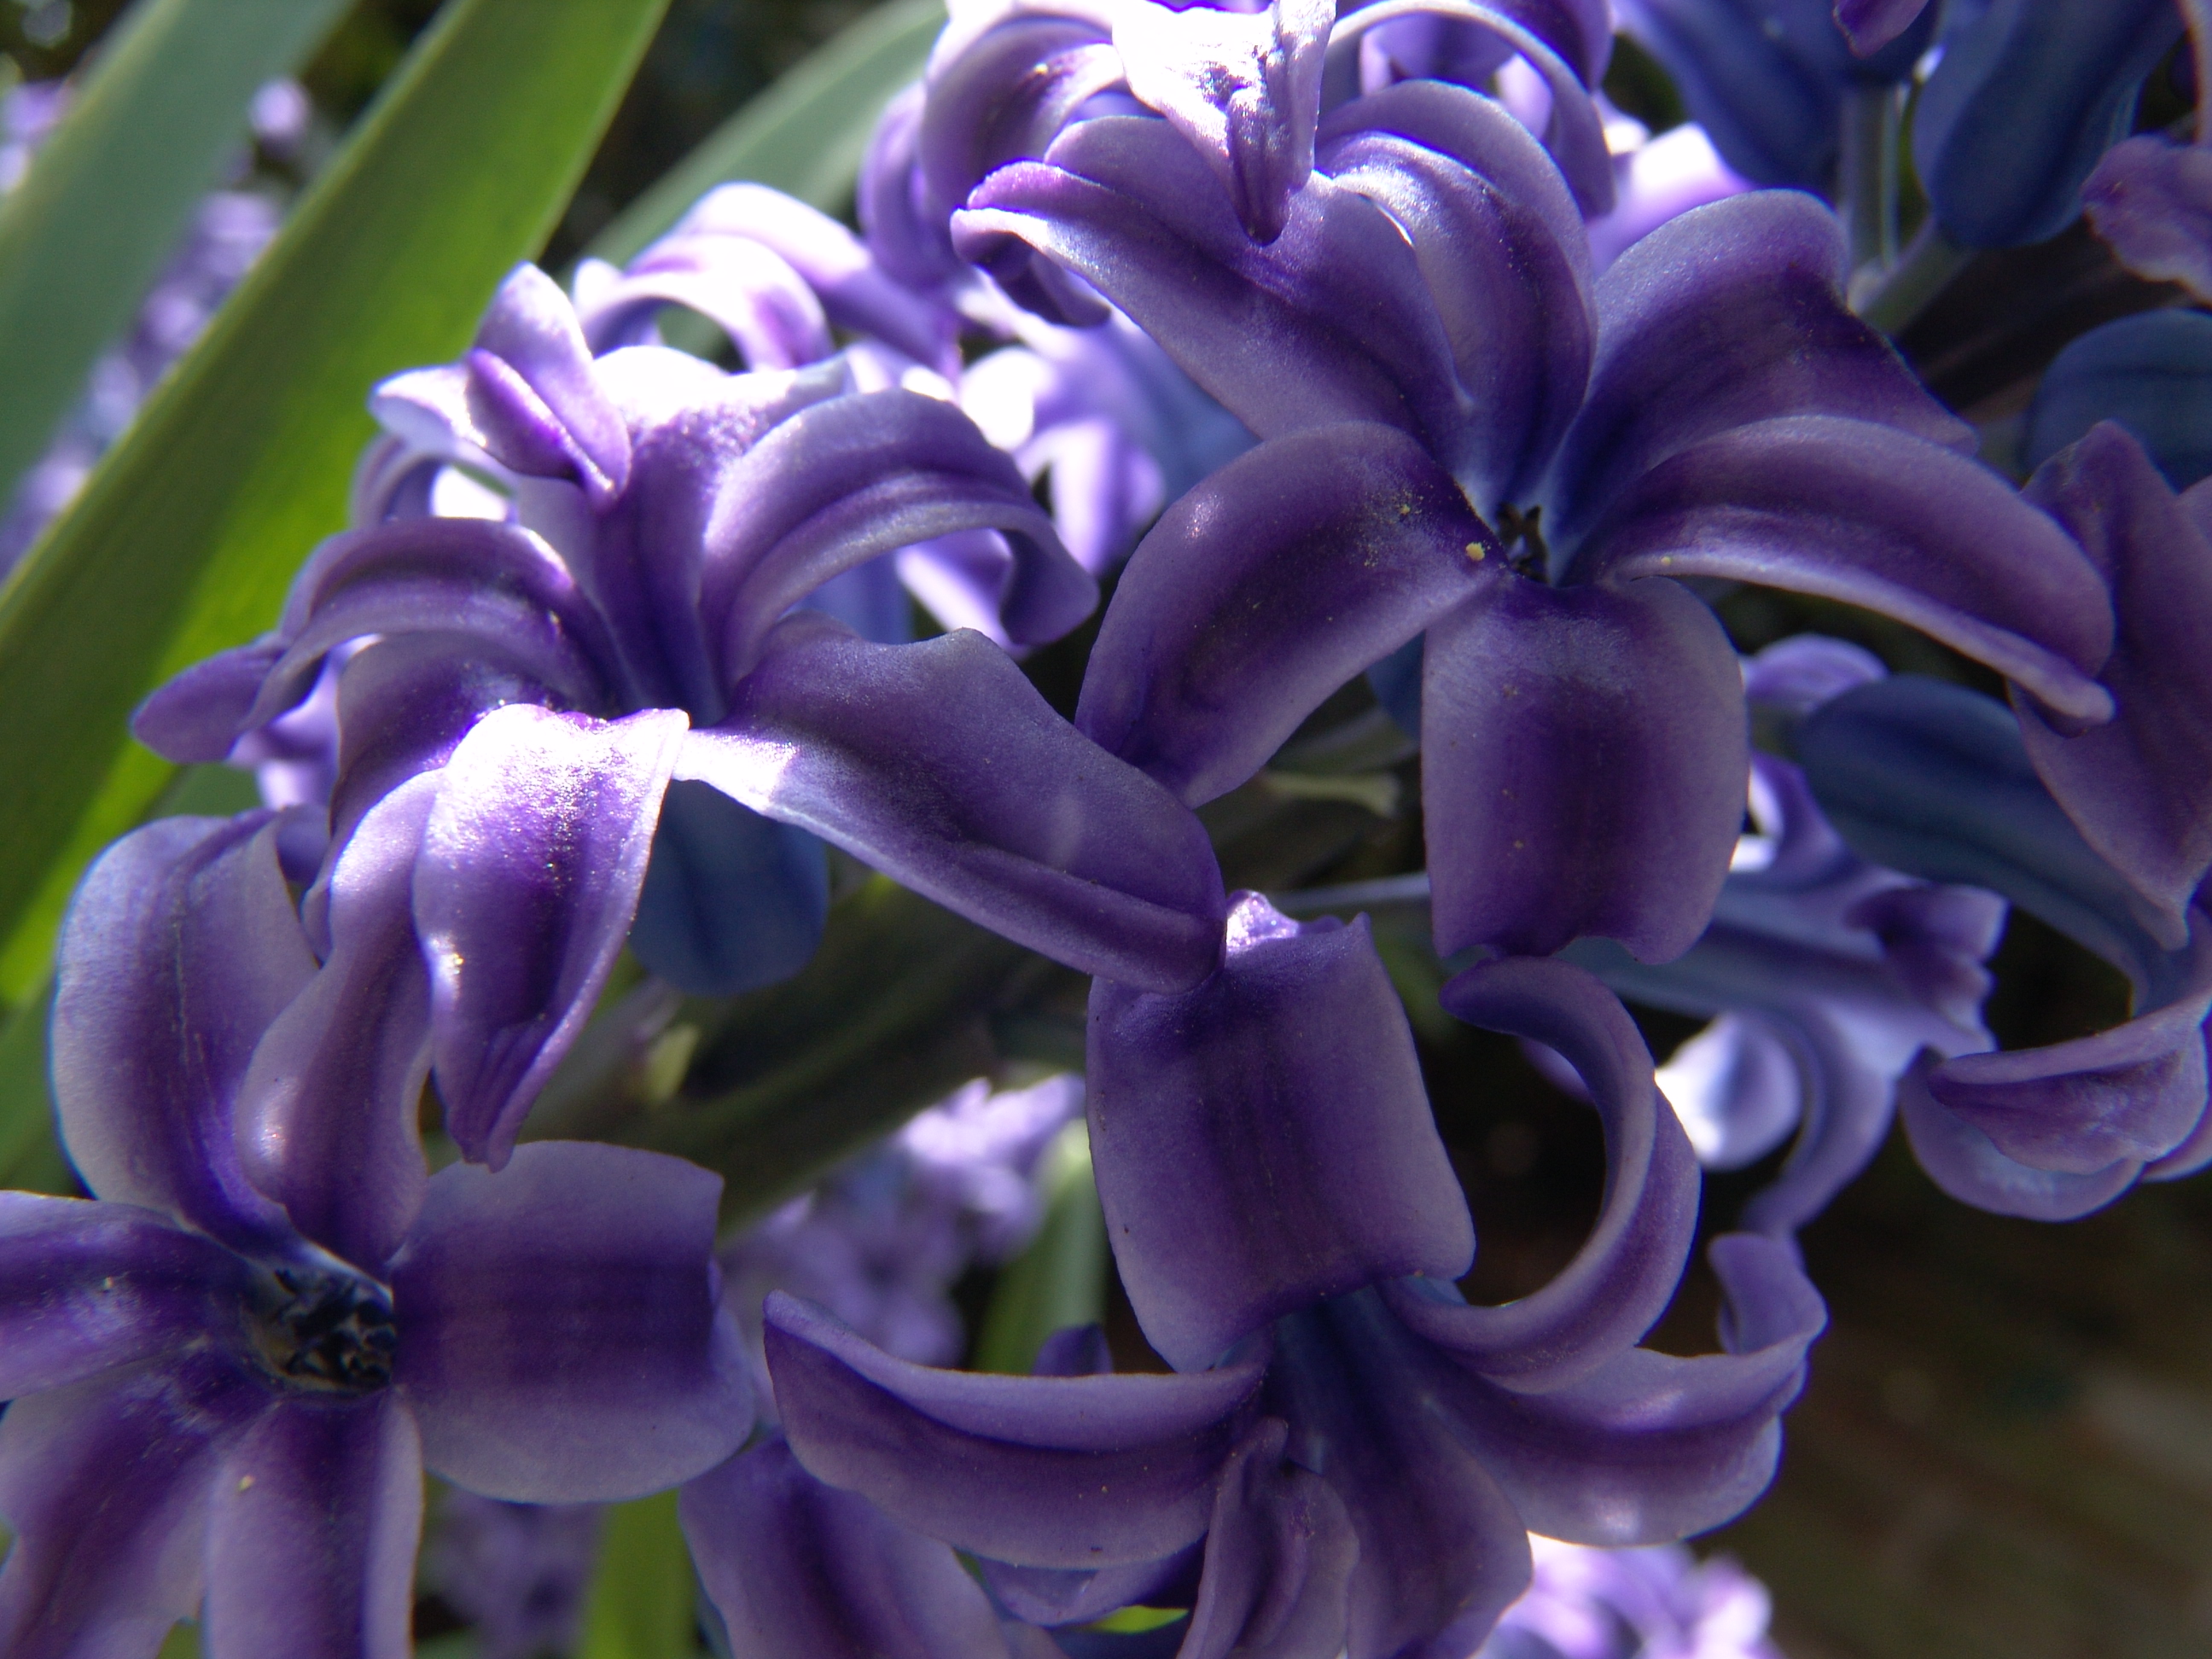 SmlPx: Flowers: hyacinth